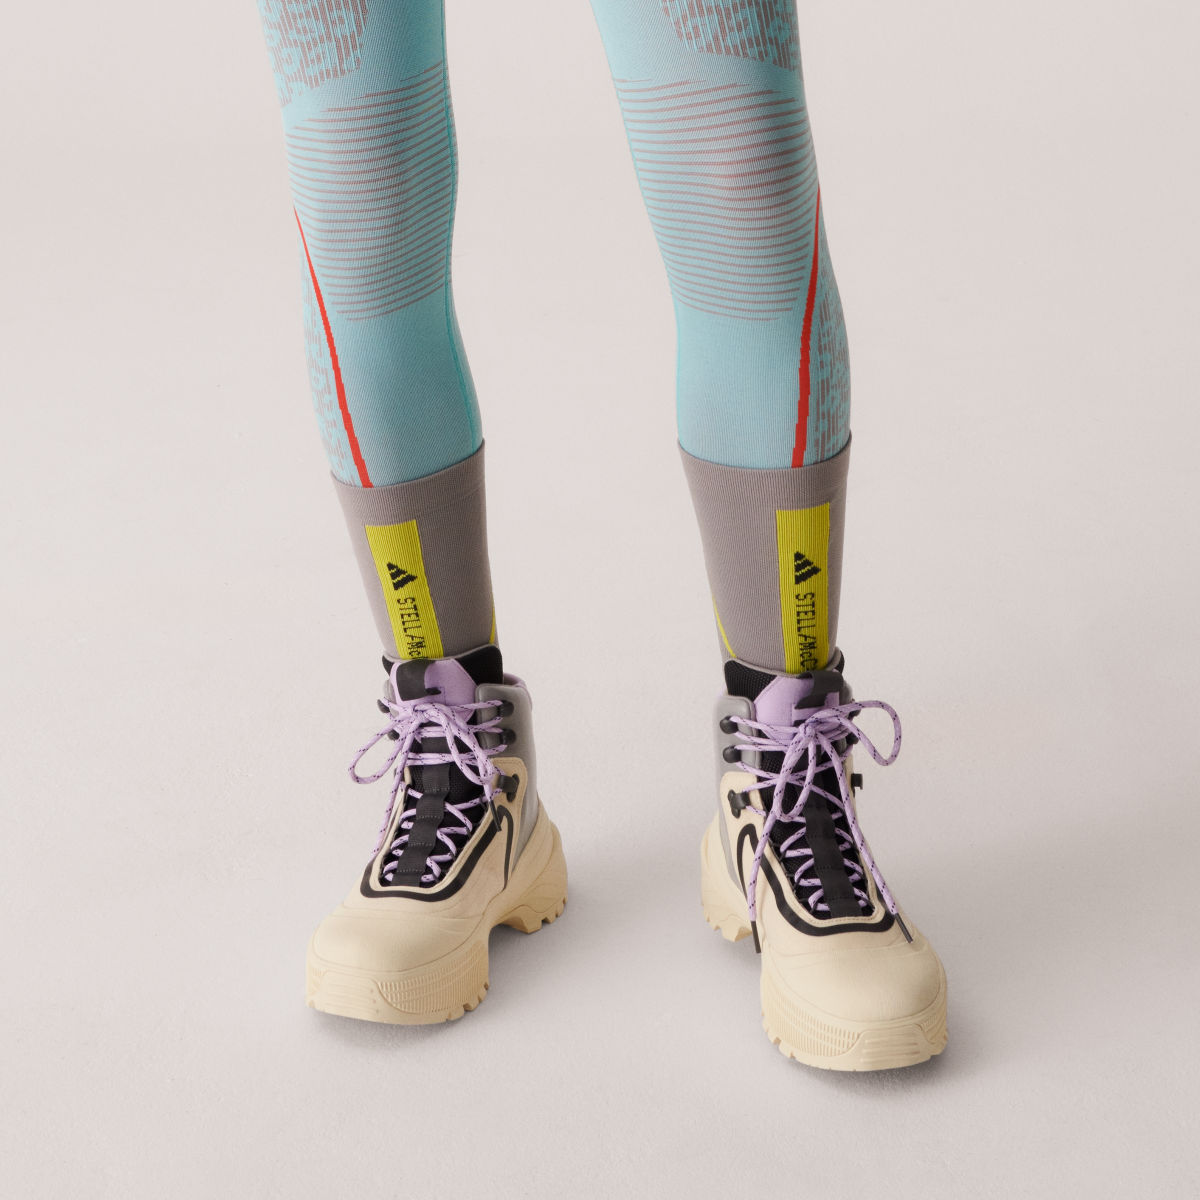 Adidas by Stella McCartney x Terrex Hiking Boots. 5